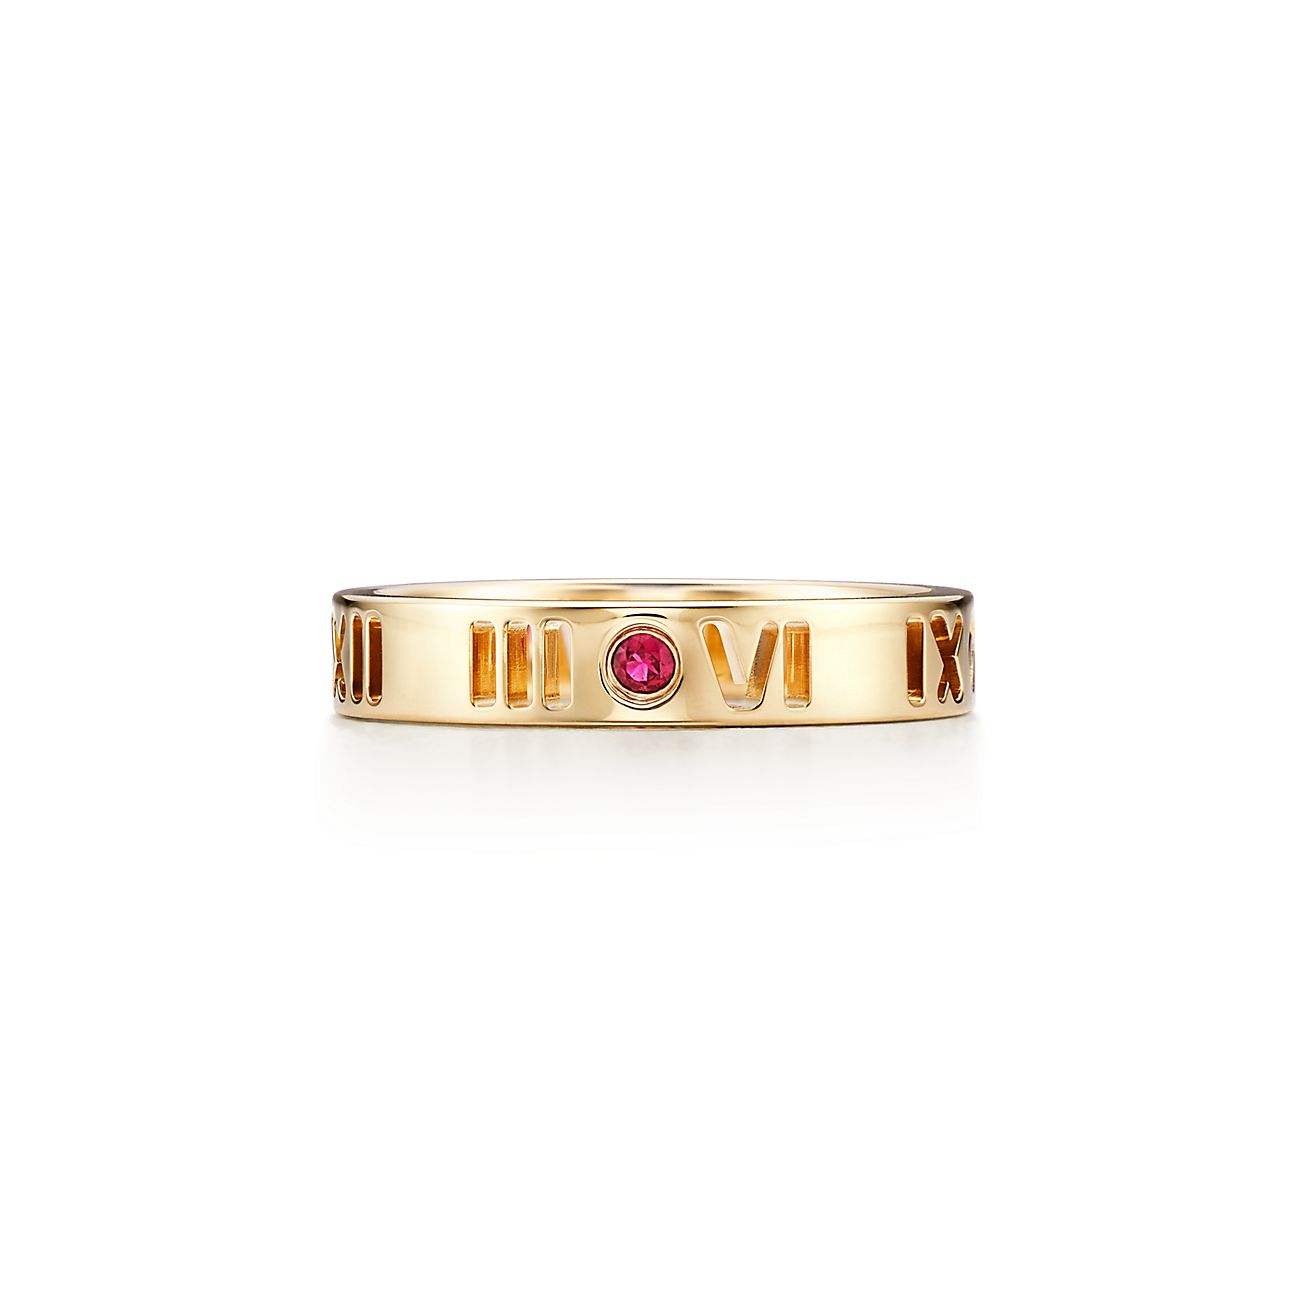 Atlas® pierced narrow ring in 18k gold 